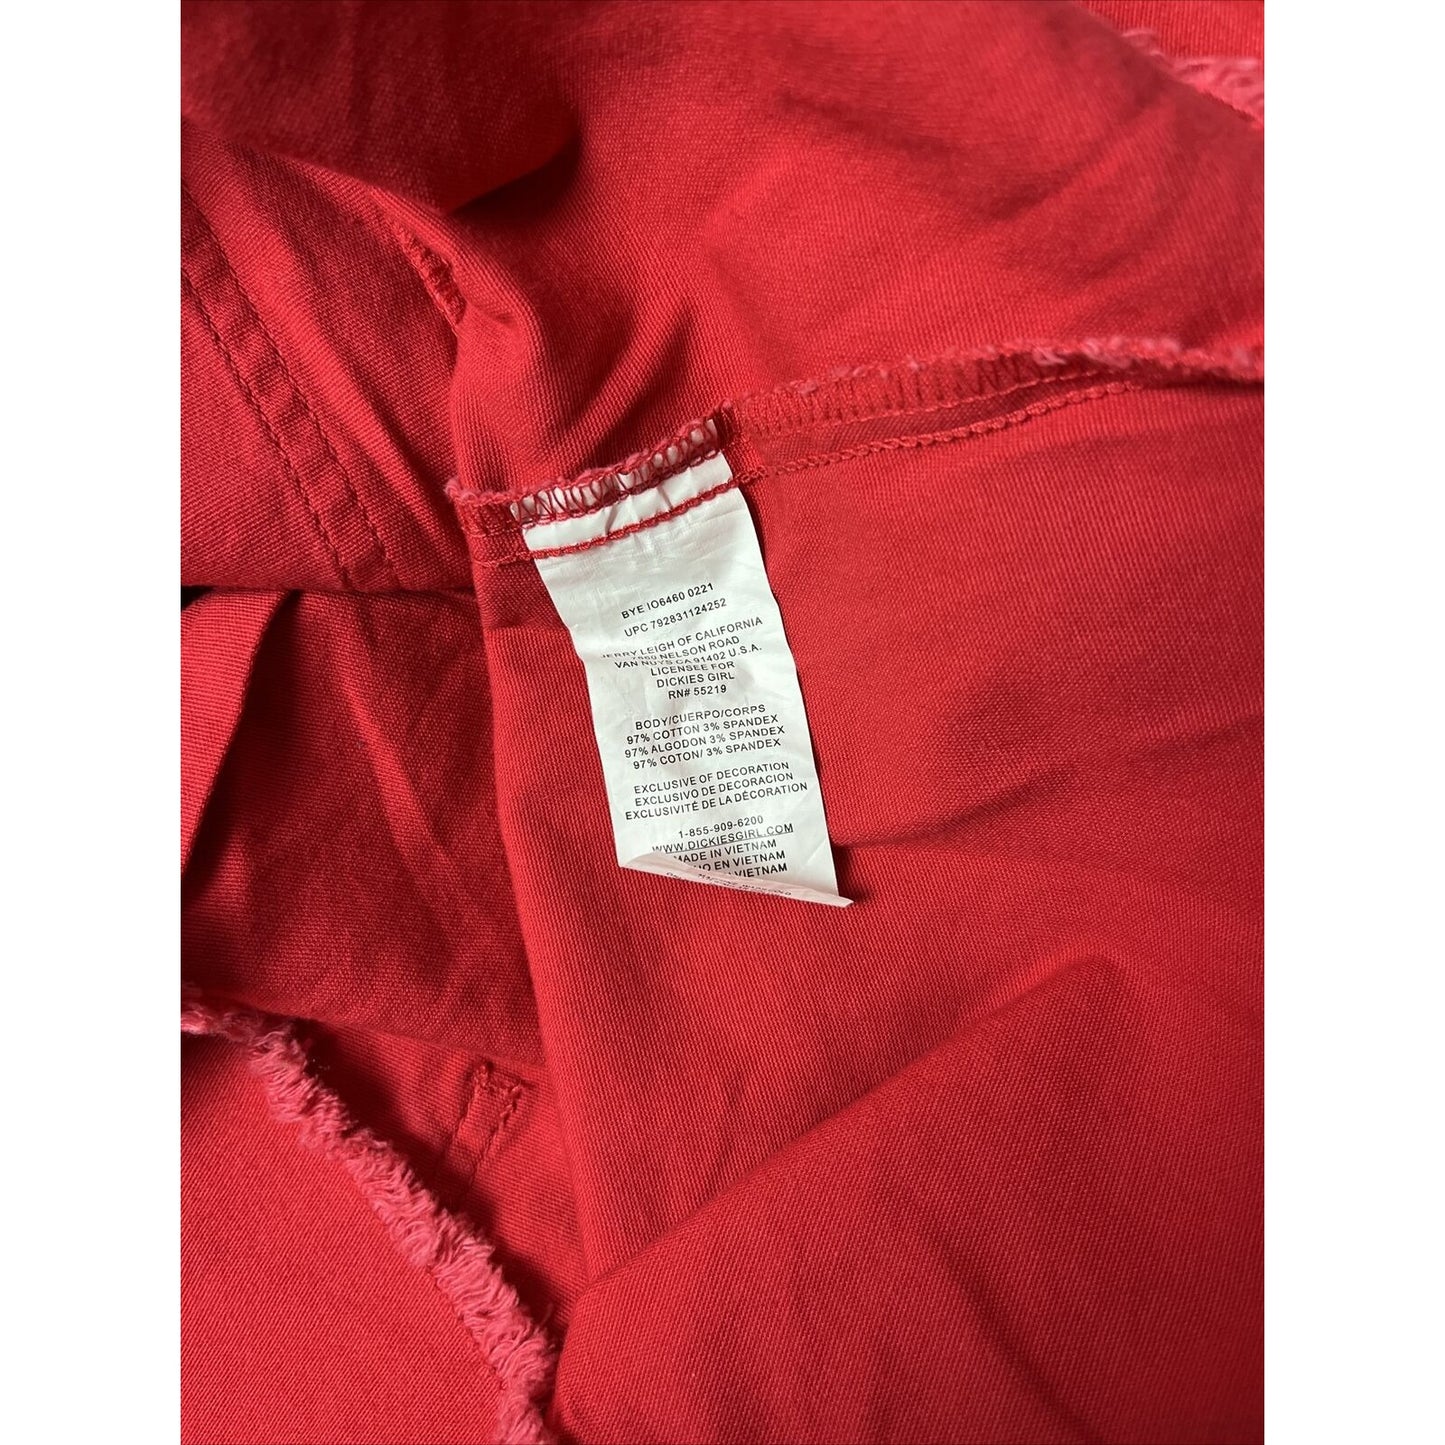 DICKIES RED DENIM SKIRTALL SKIRT OVERALLS CARGO JUMPER DRESS MINI SHORT MEDIUM